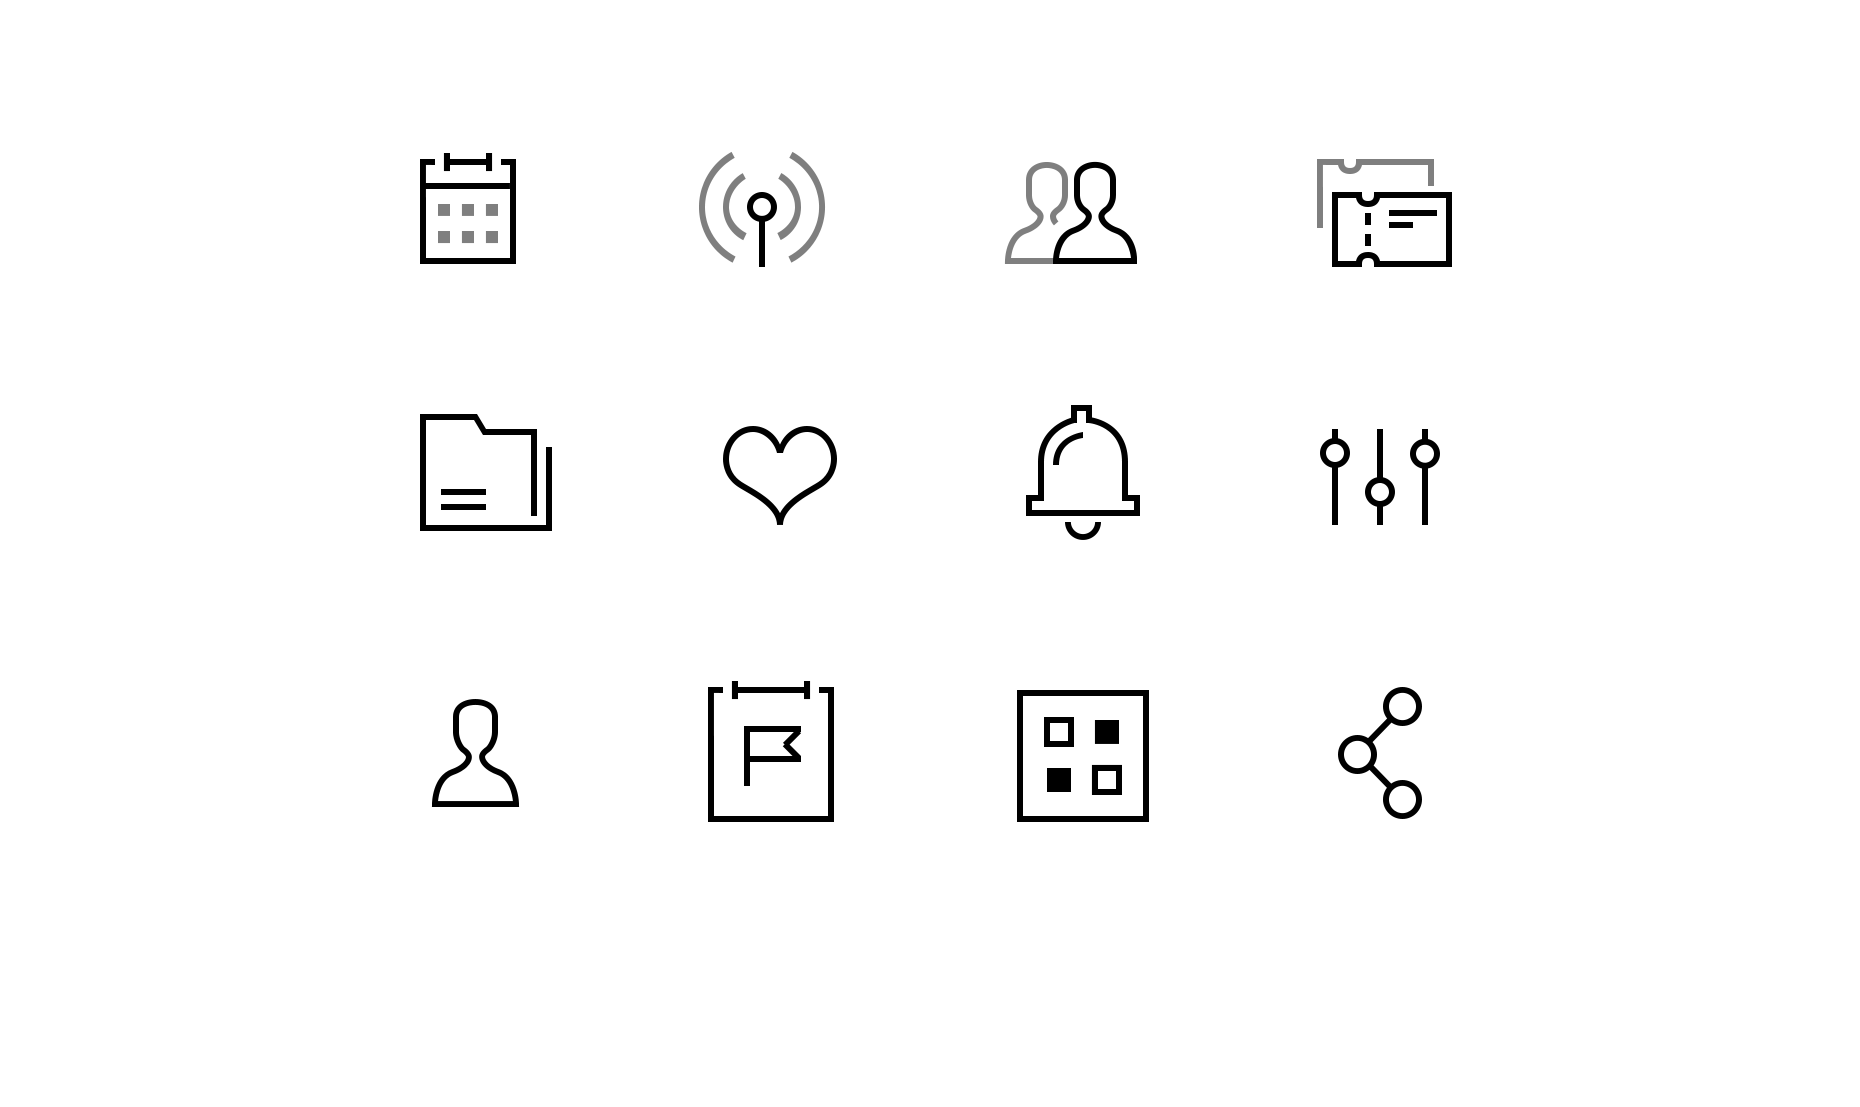 Full icons